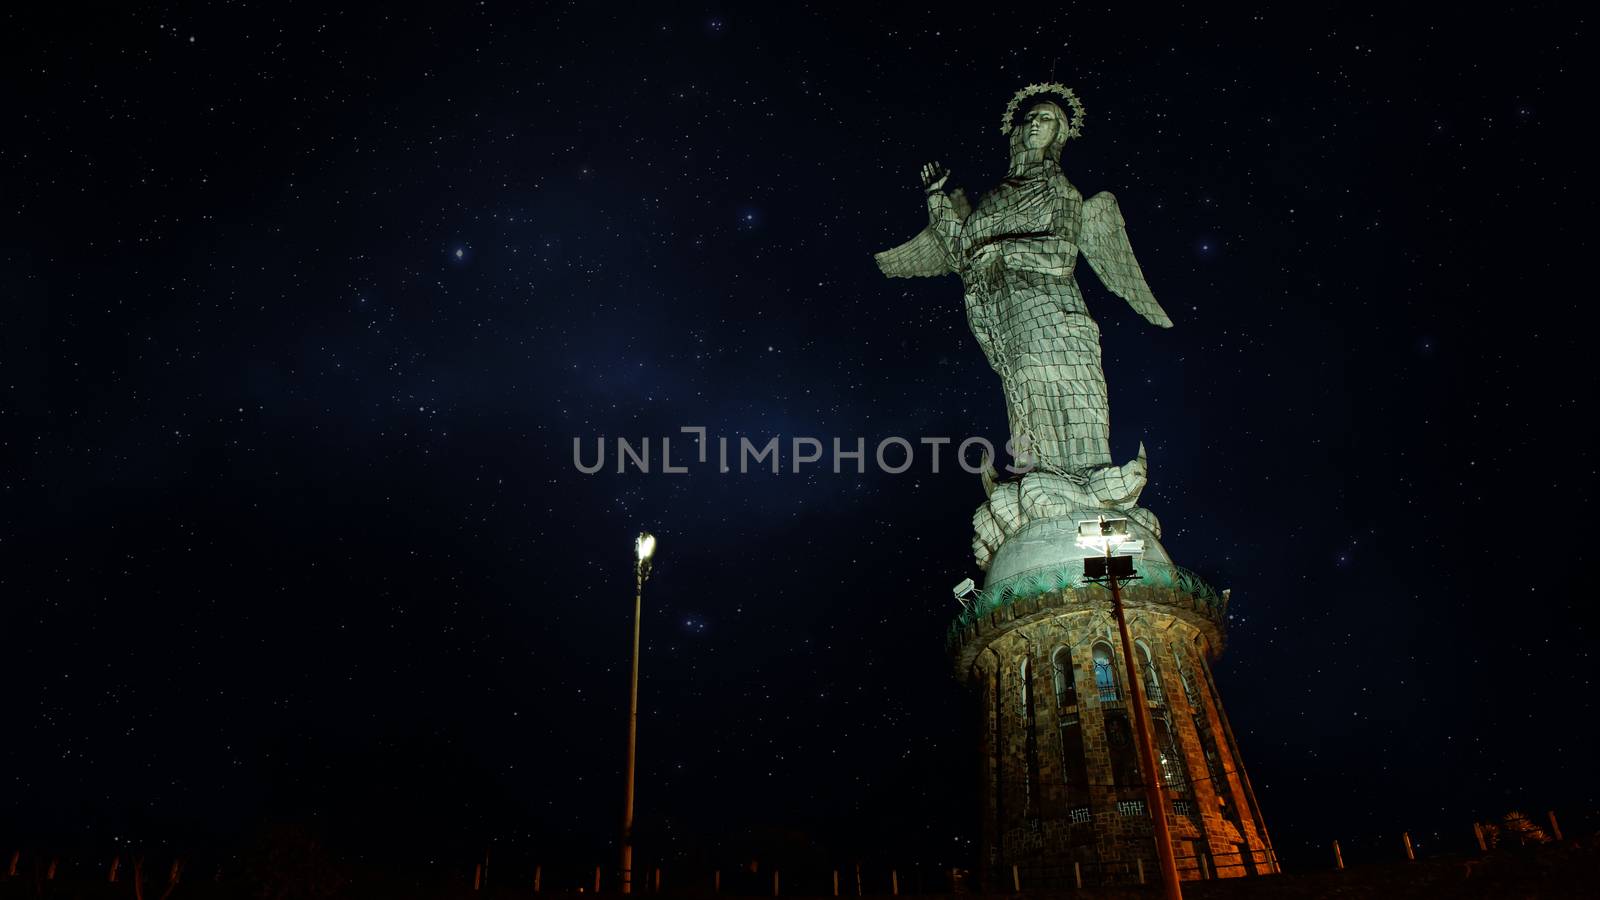 Quito, Pichincha / Ecuador, June 8 2016: Night view of Virgen de El Panecillo or Virgen de Legarda. It is located on the top of Panecillo hill near the historical center of the city of Quito. Ecuador